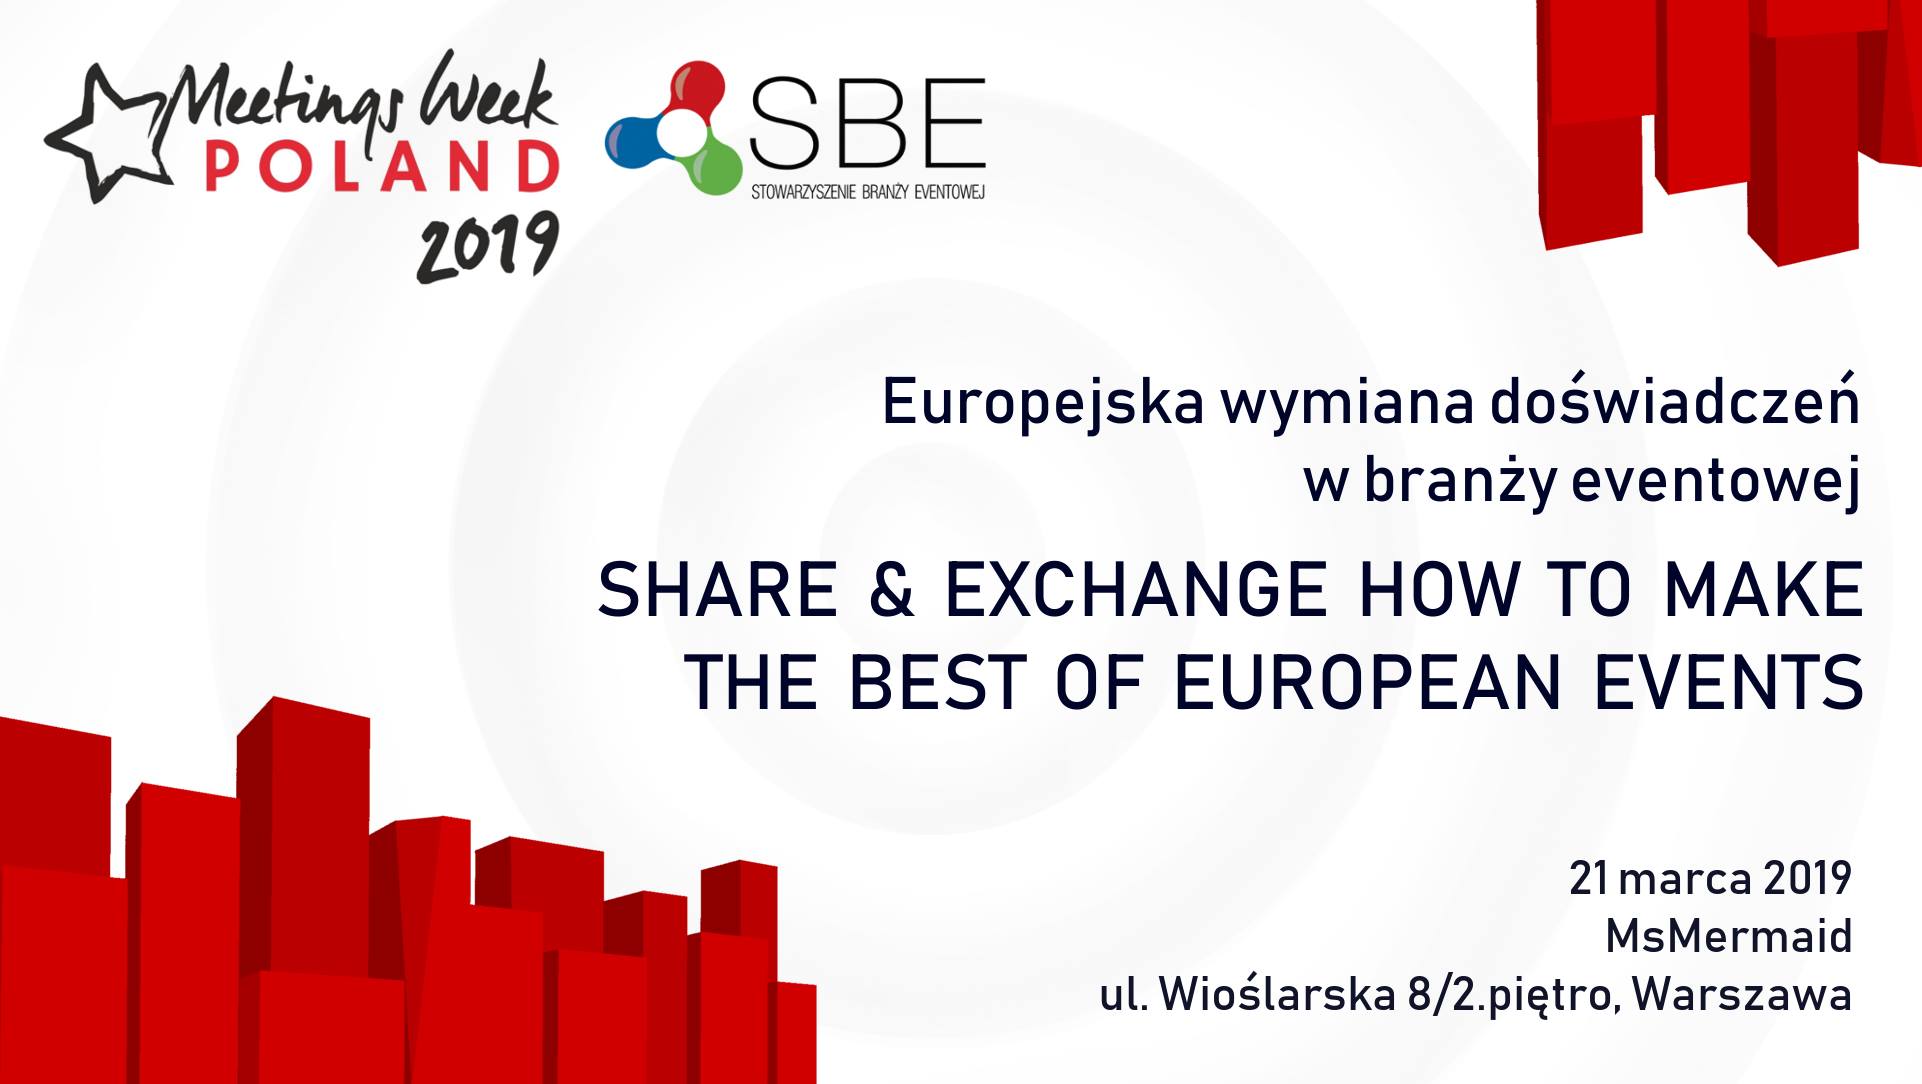 Meetings Week Poland 21 marca 2019 - Dzień SBE